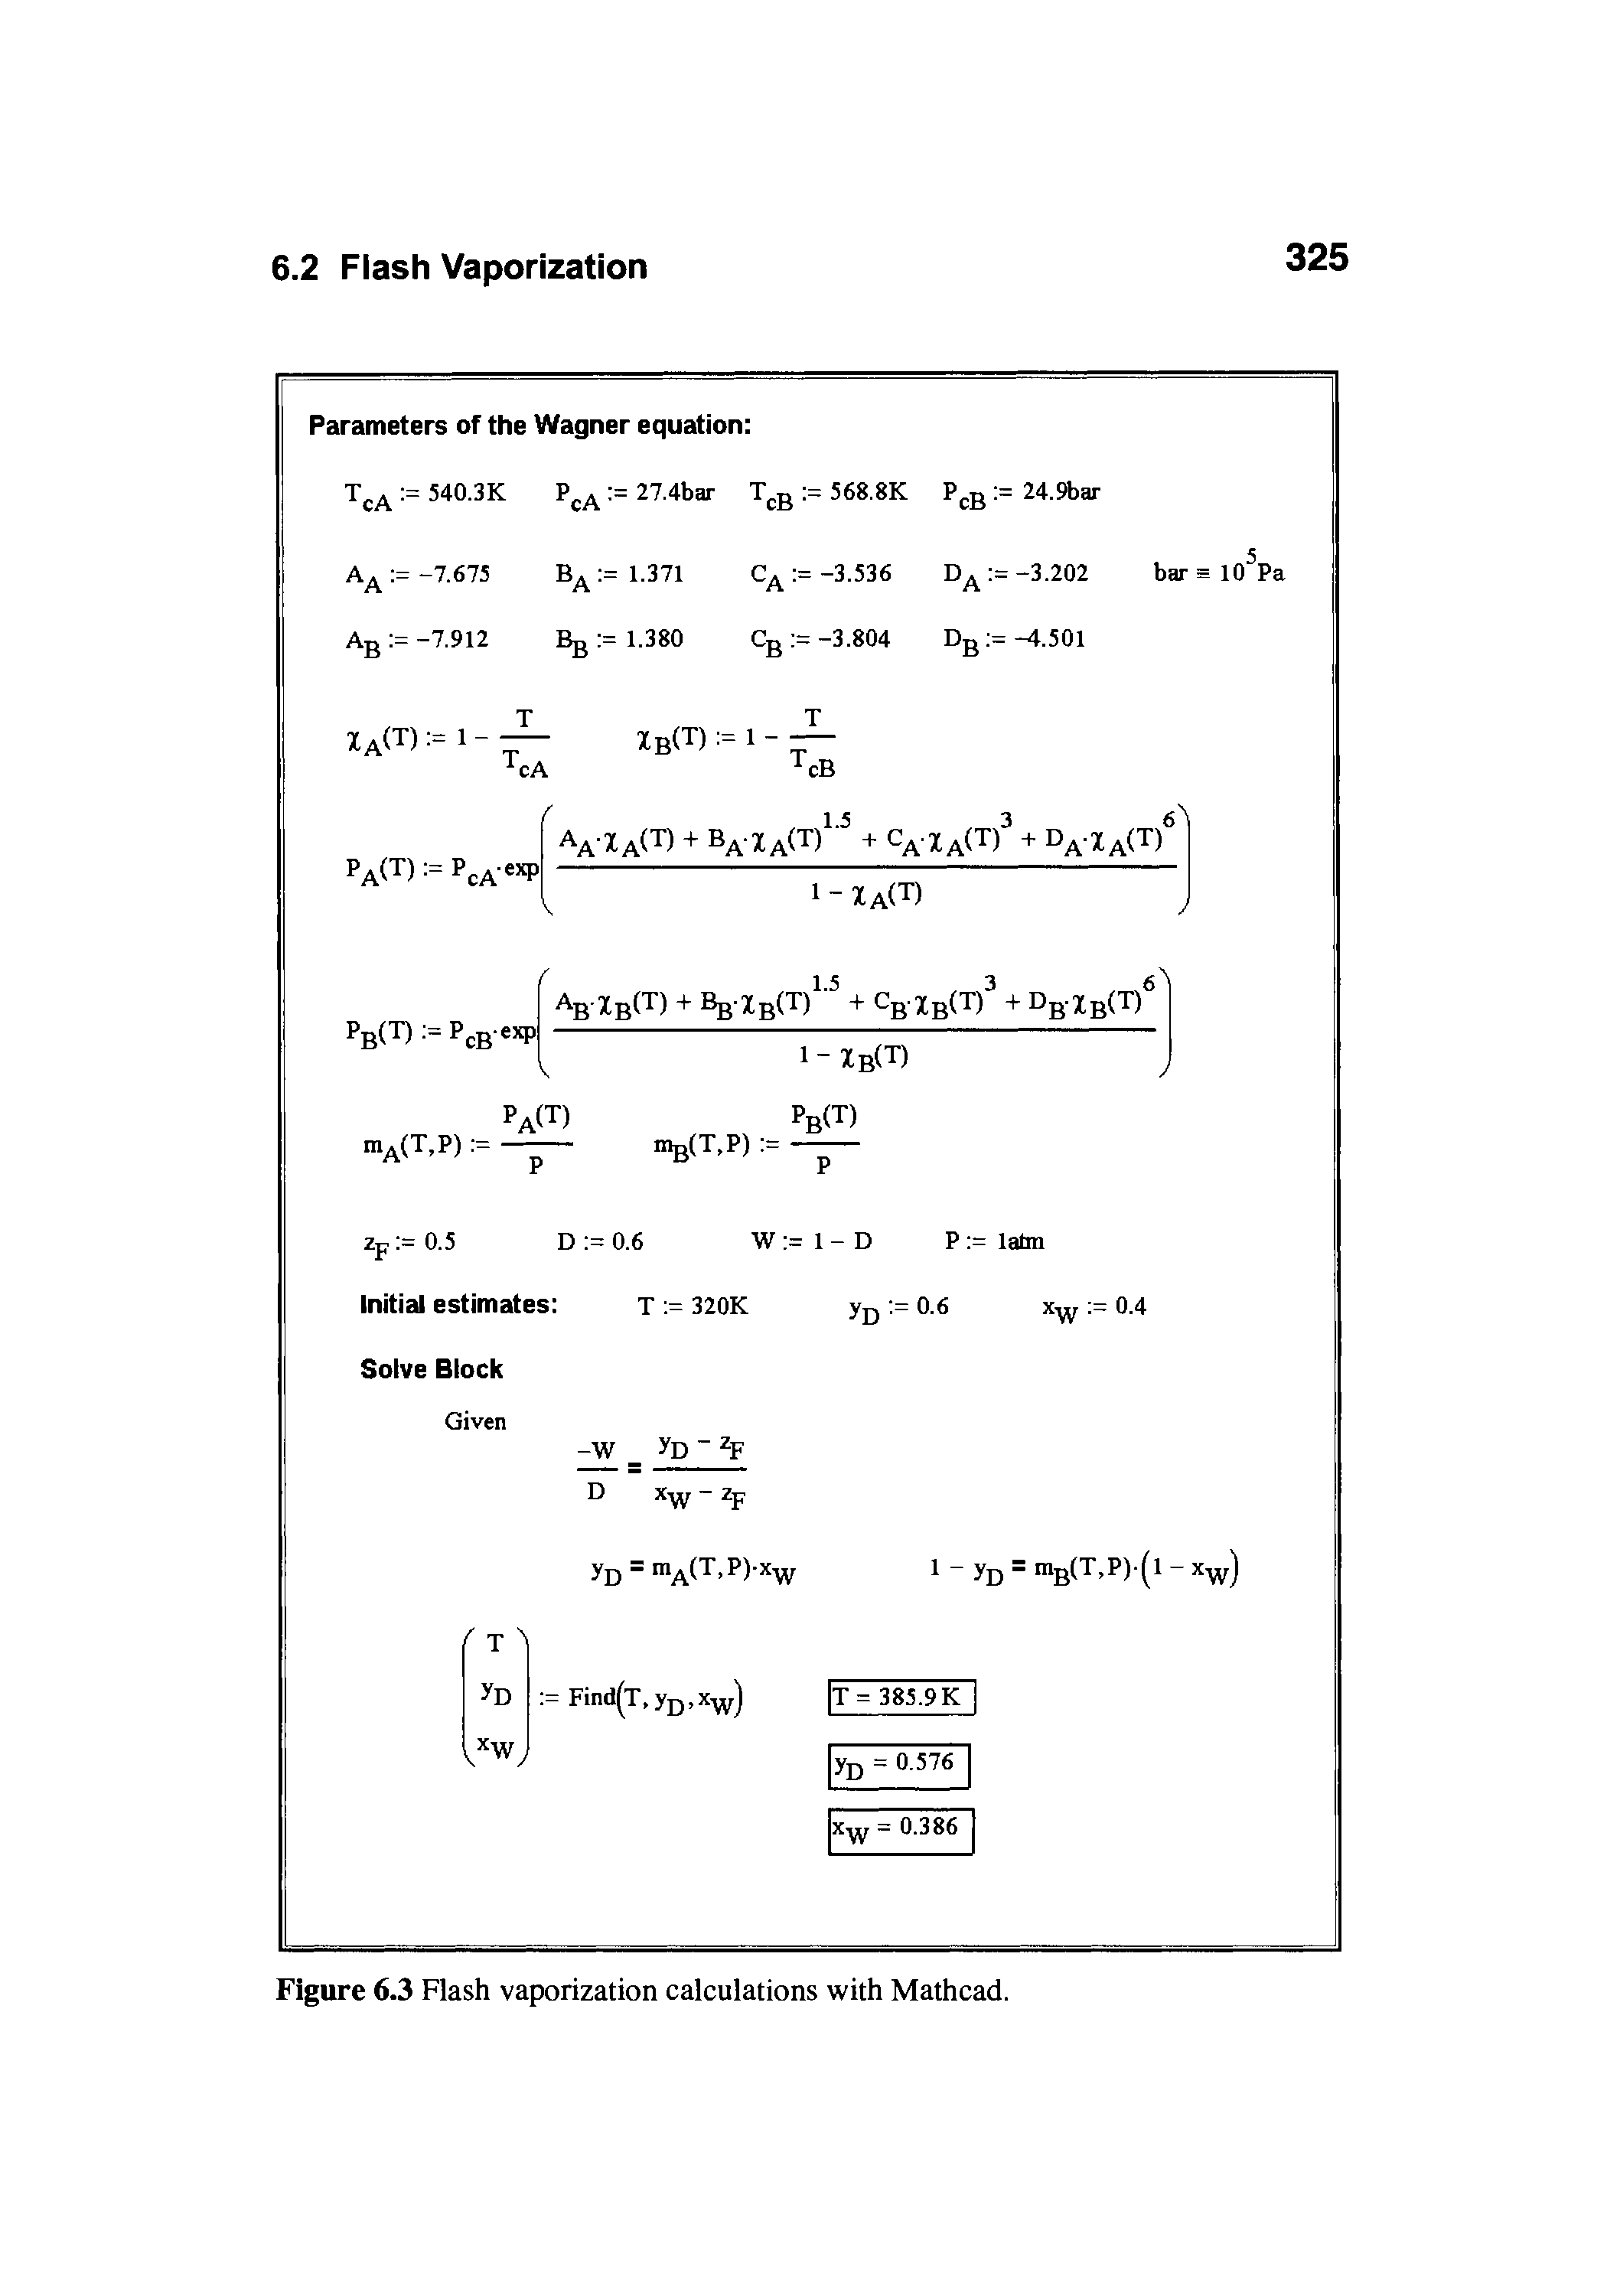 Figure 6.3 Flash vaporization calculations with Mathcad.